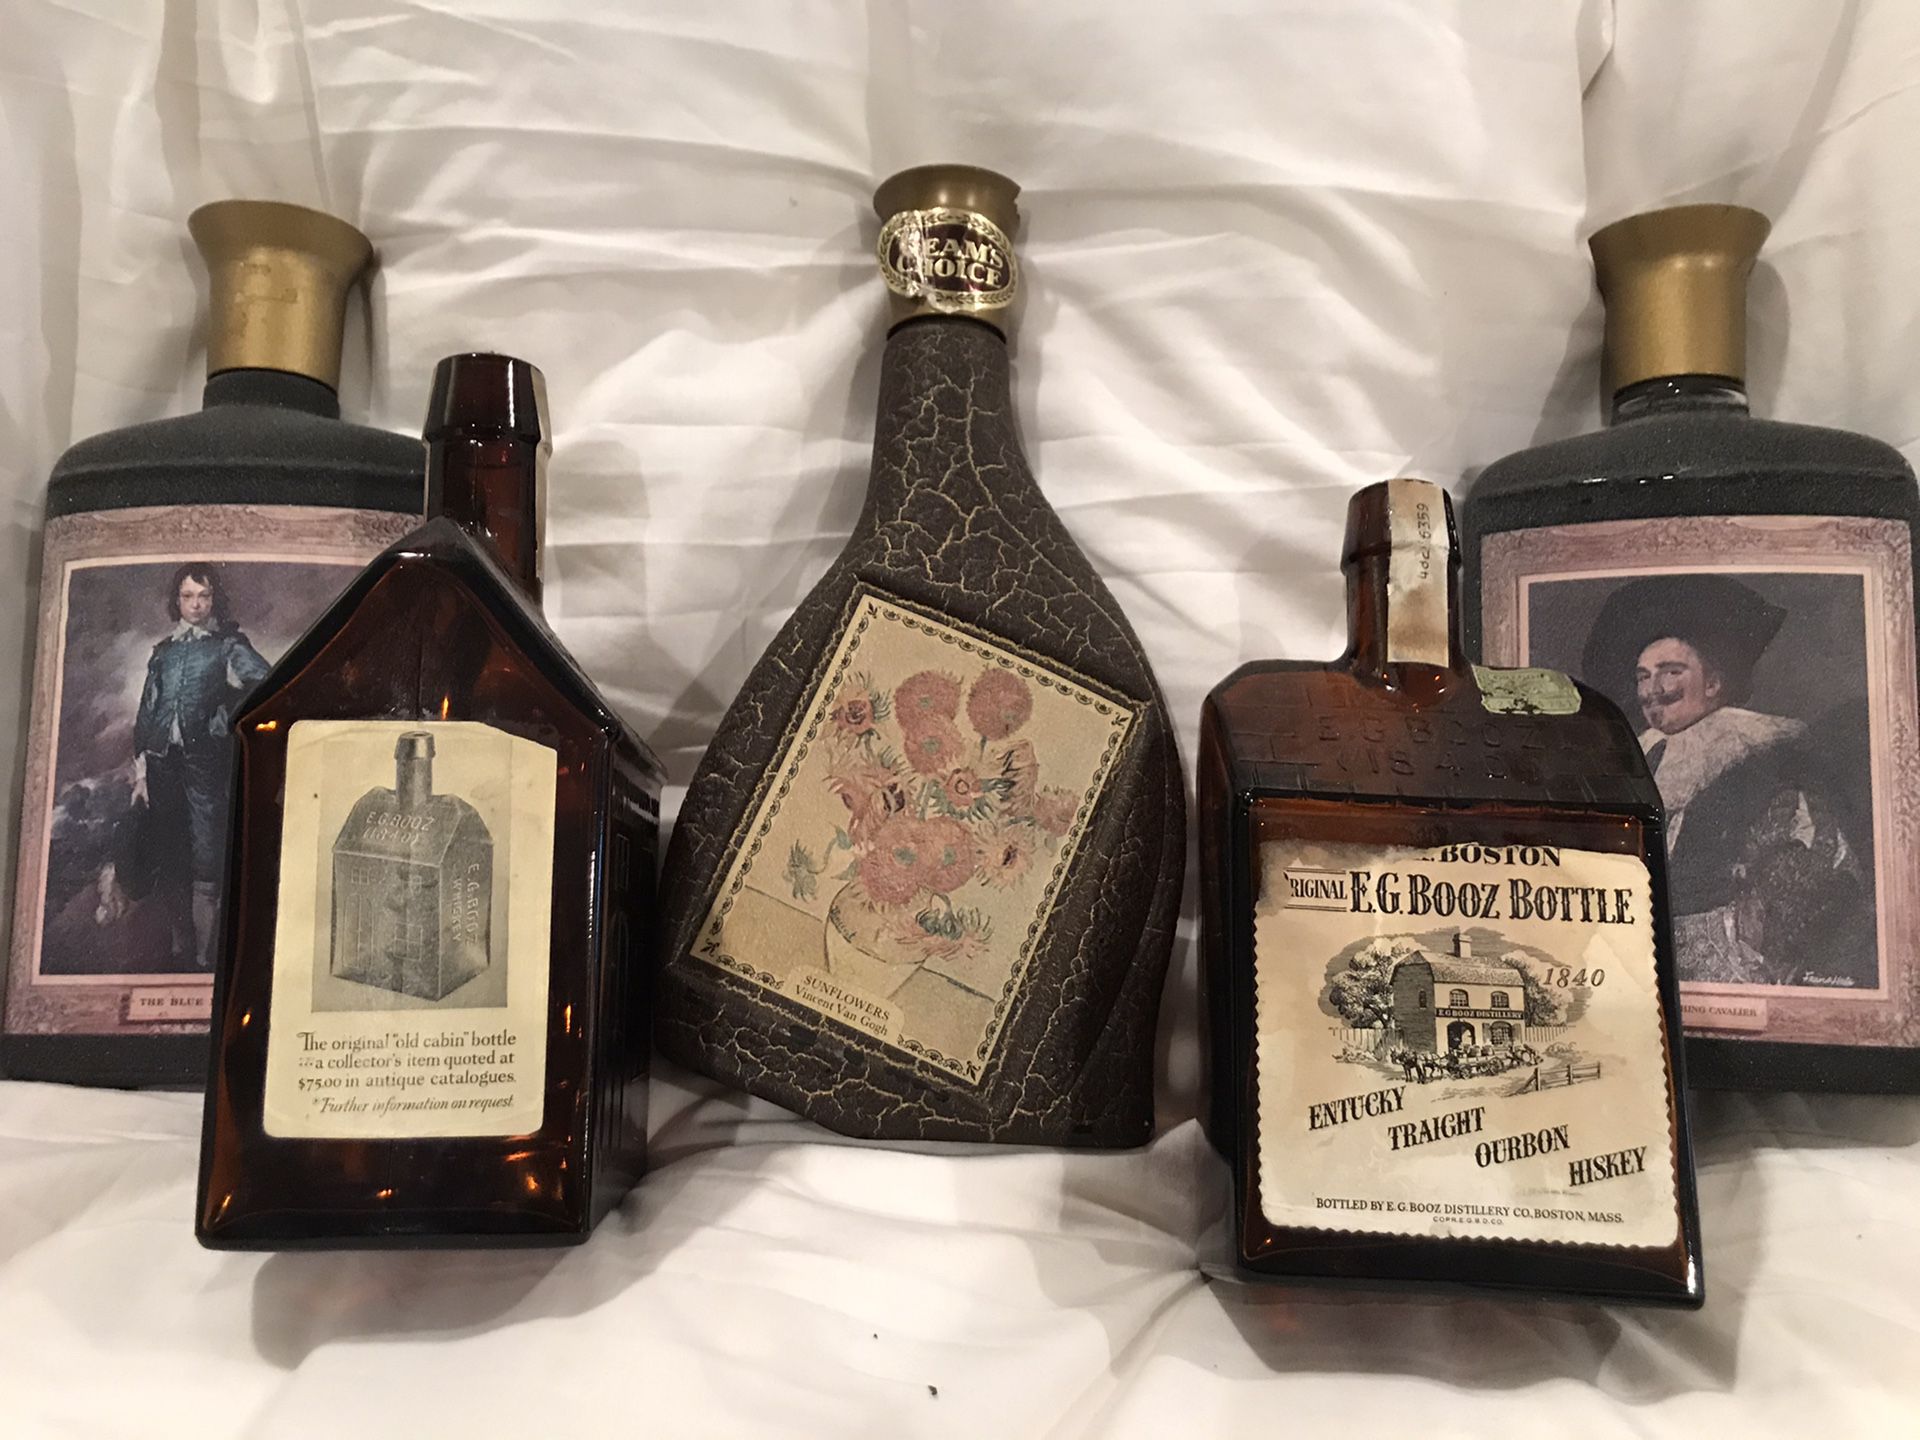 Collectible liquor bottles